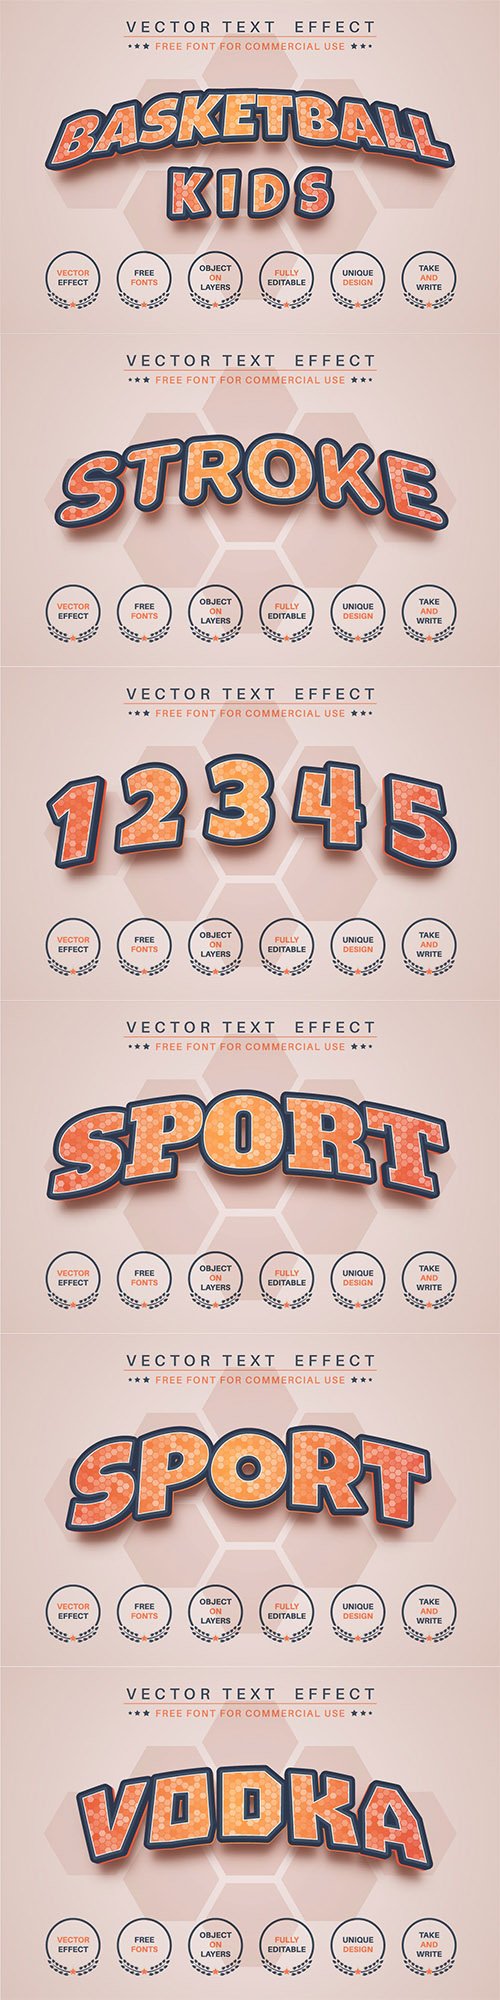 Basketball kids - editable text effect, font style